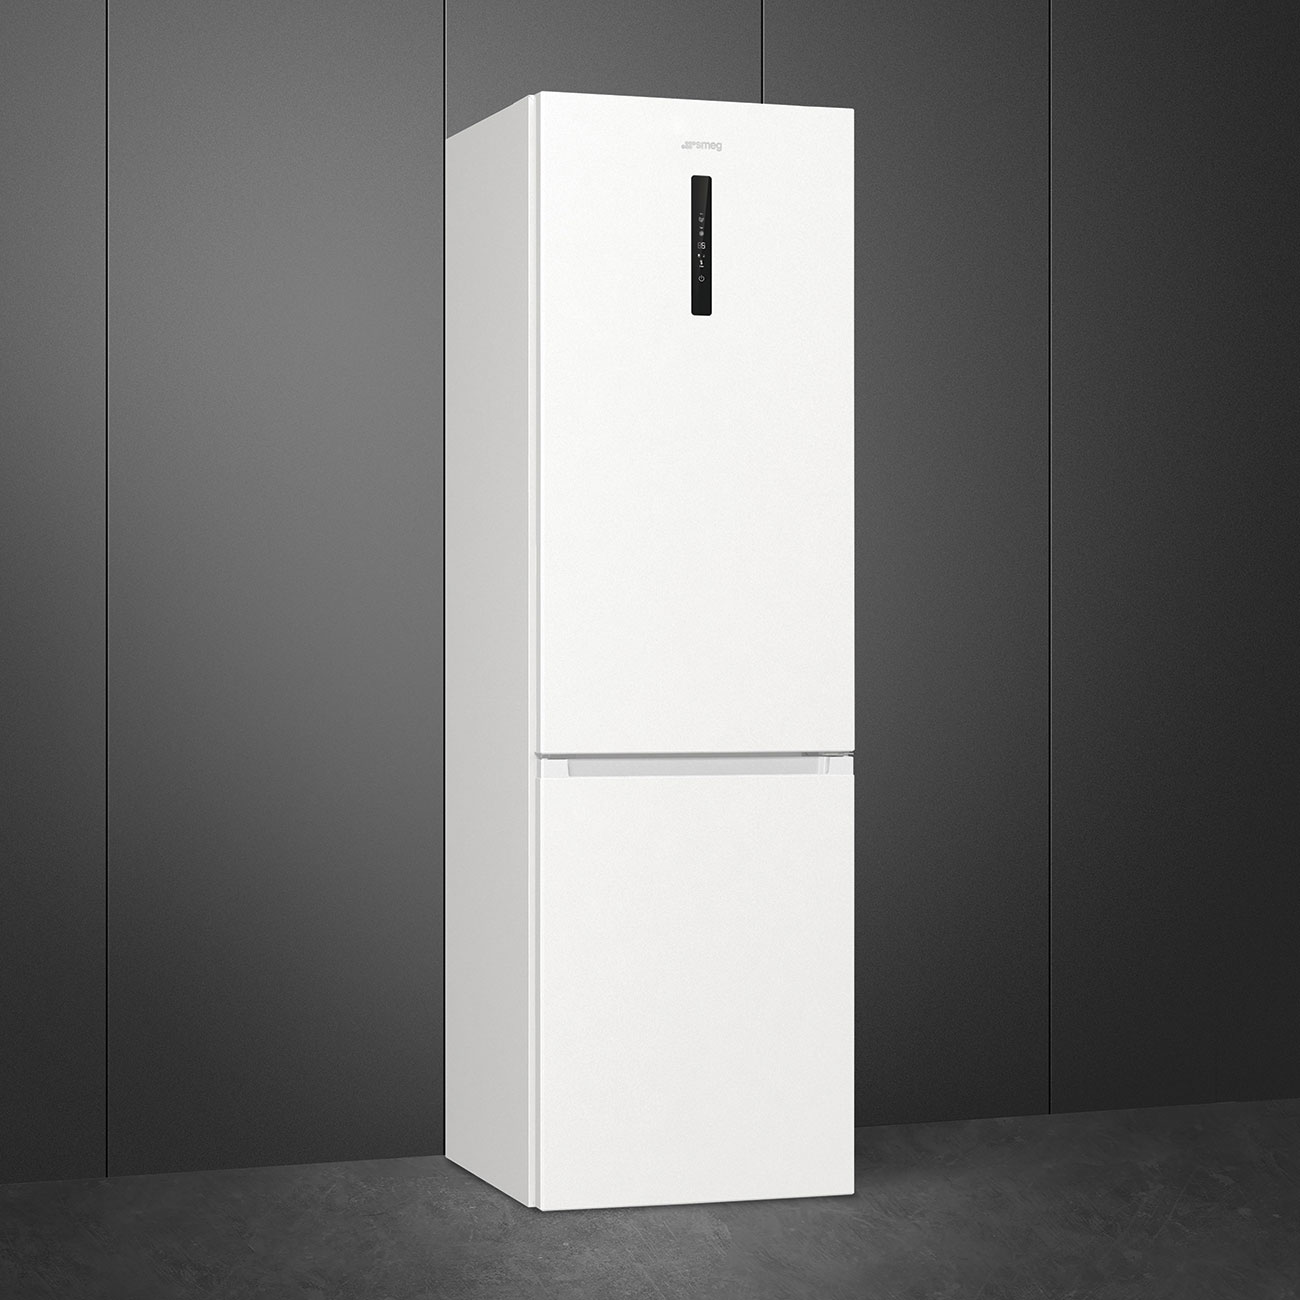 Bottom Mount Free standing refrigerator - Smeg_3